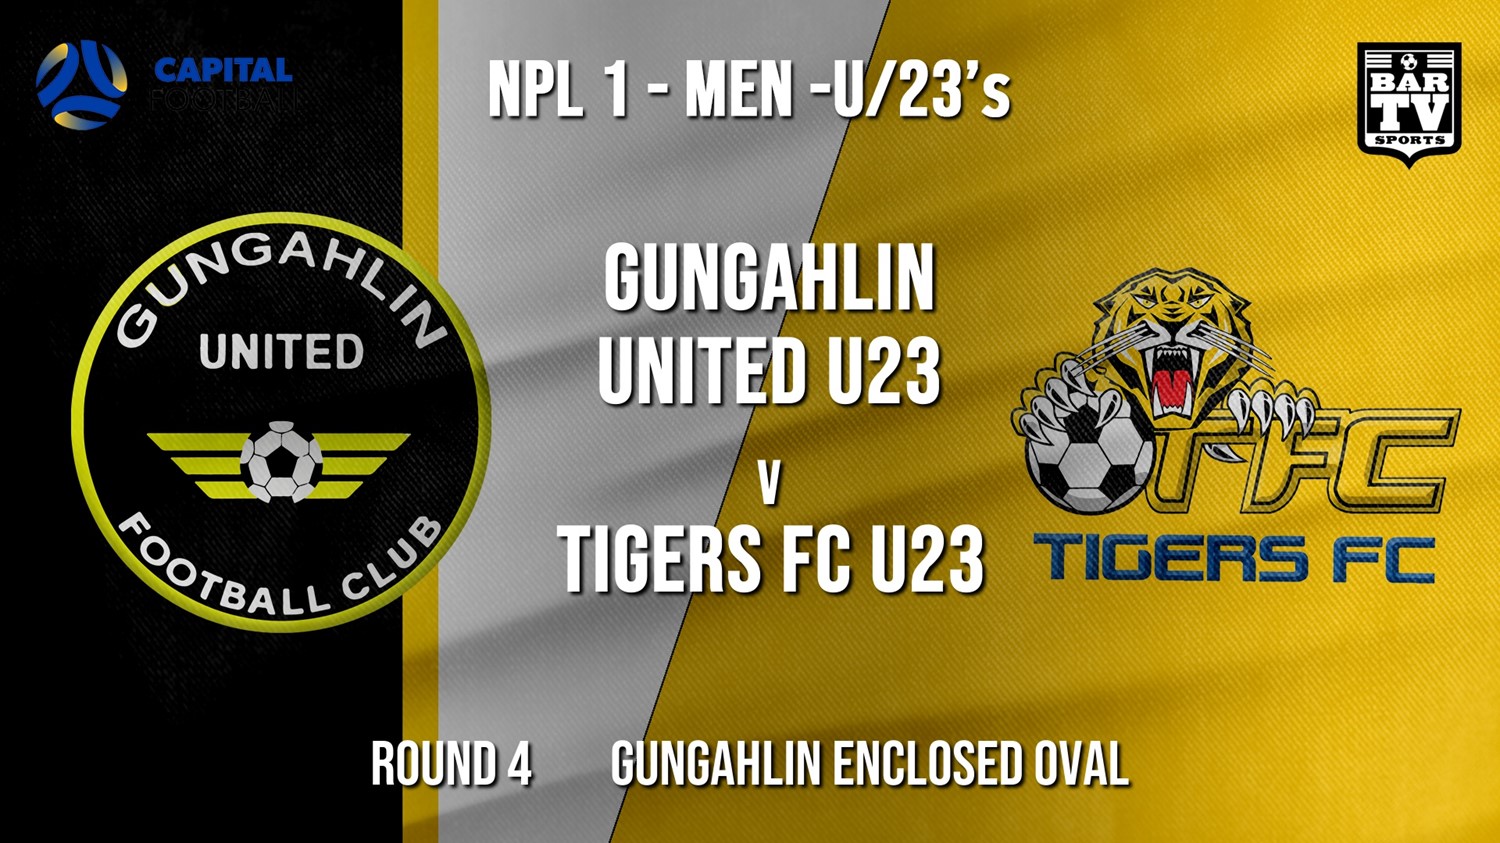 NPL1 Men - U23 - Capital Football  Round 4 - Gungahlin United U23 v Tigers FC U23 (1) Minigame Slate Image